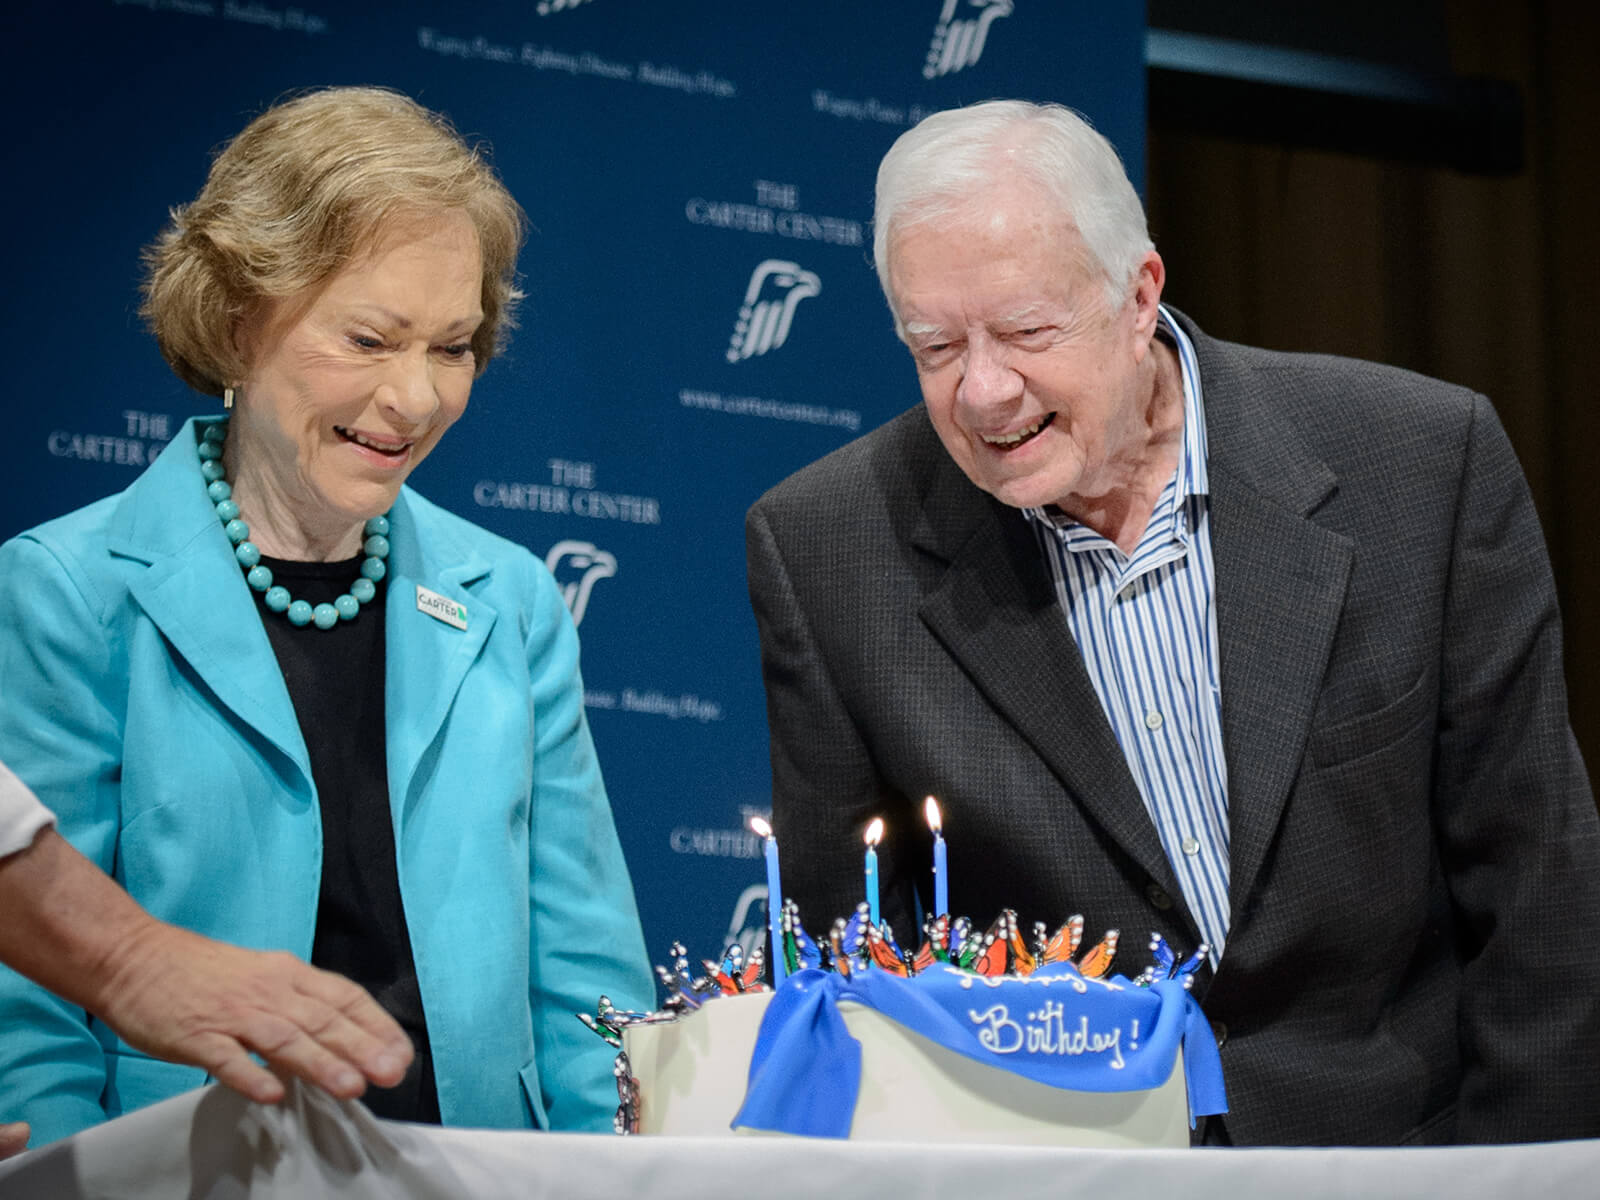 Happy Birthday Jimmy Carter!